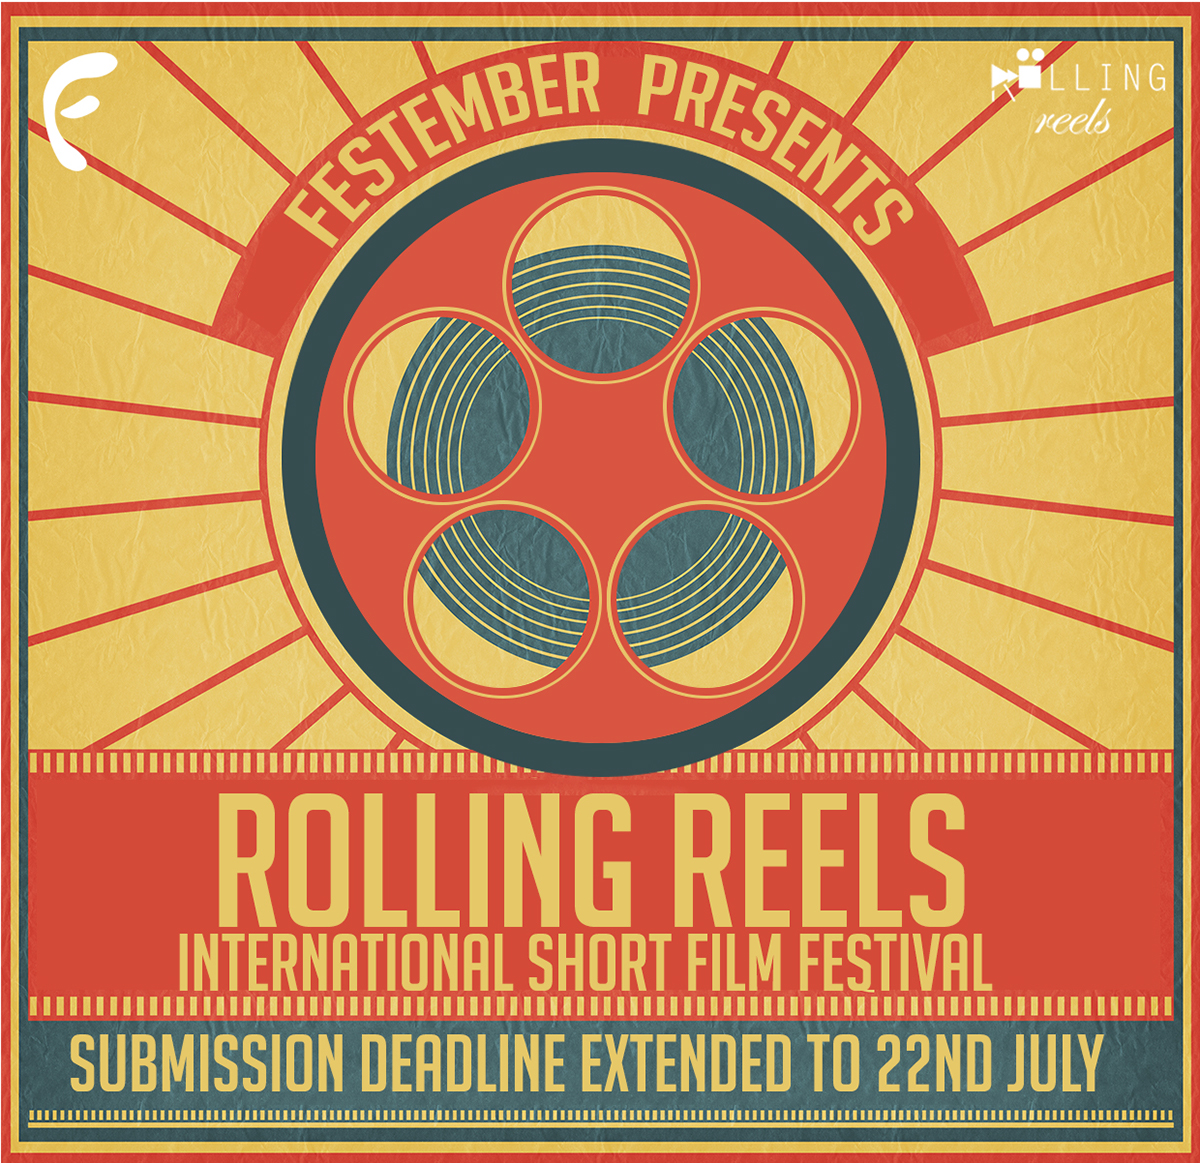 filmfestival rollingreels festember Character reels rolling typo filmindustry shortfilm International